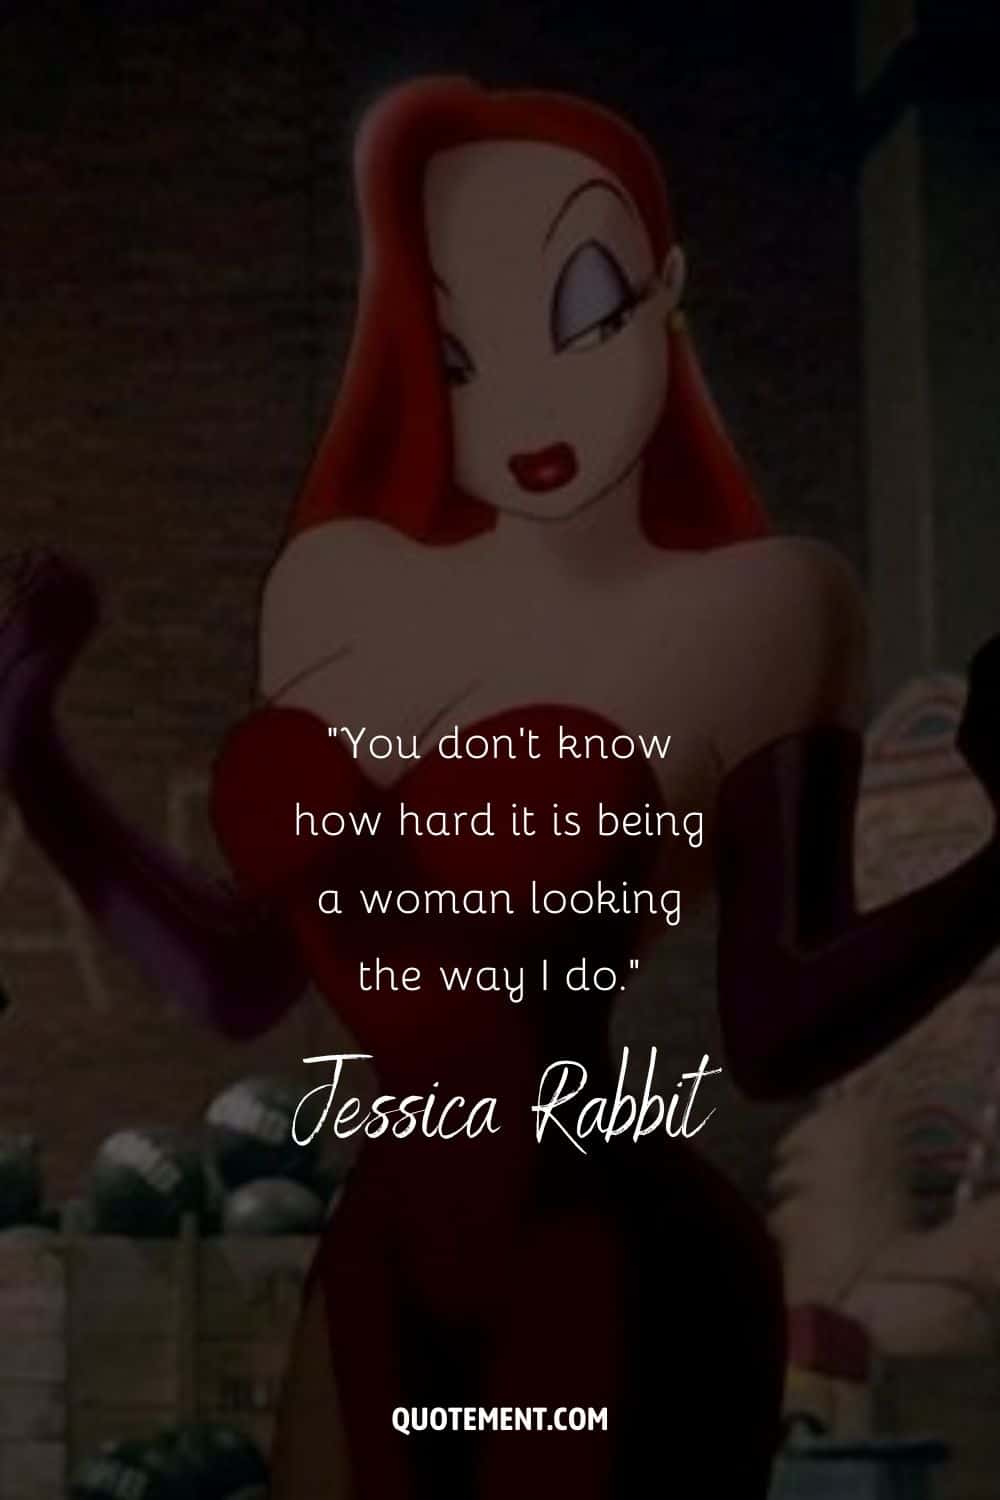 Jessica Rabbit quote represented by Jessica Rabbit image
